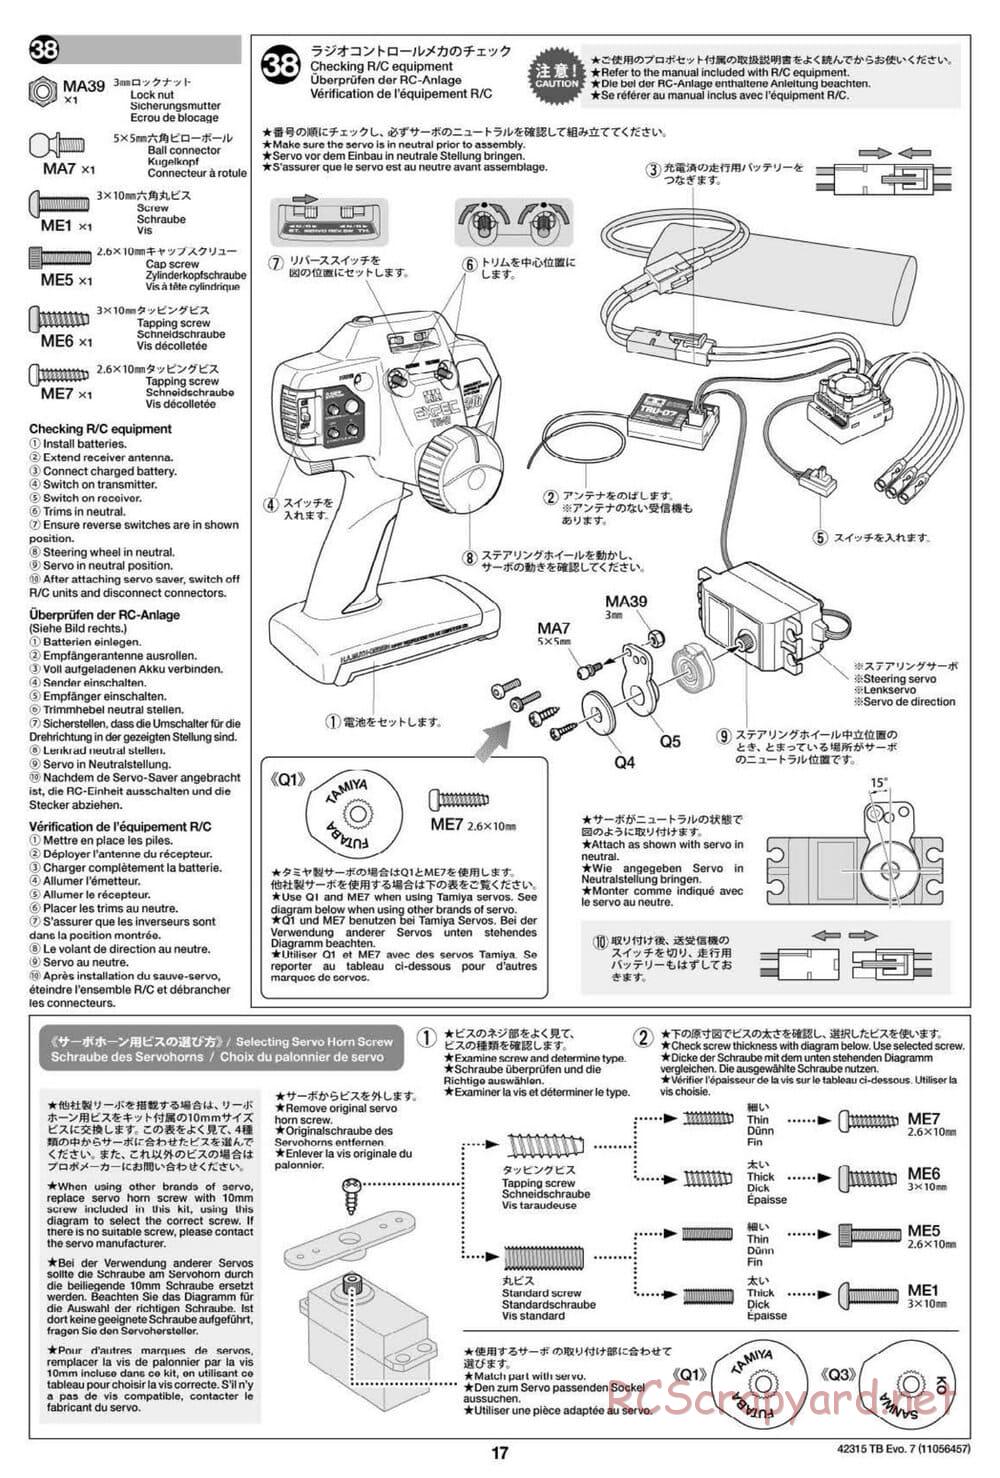 Tamiya - TB Evo.7 Chassis - Manual - Page 17